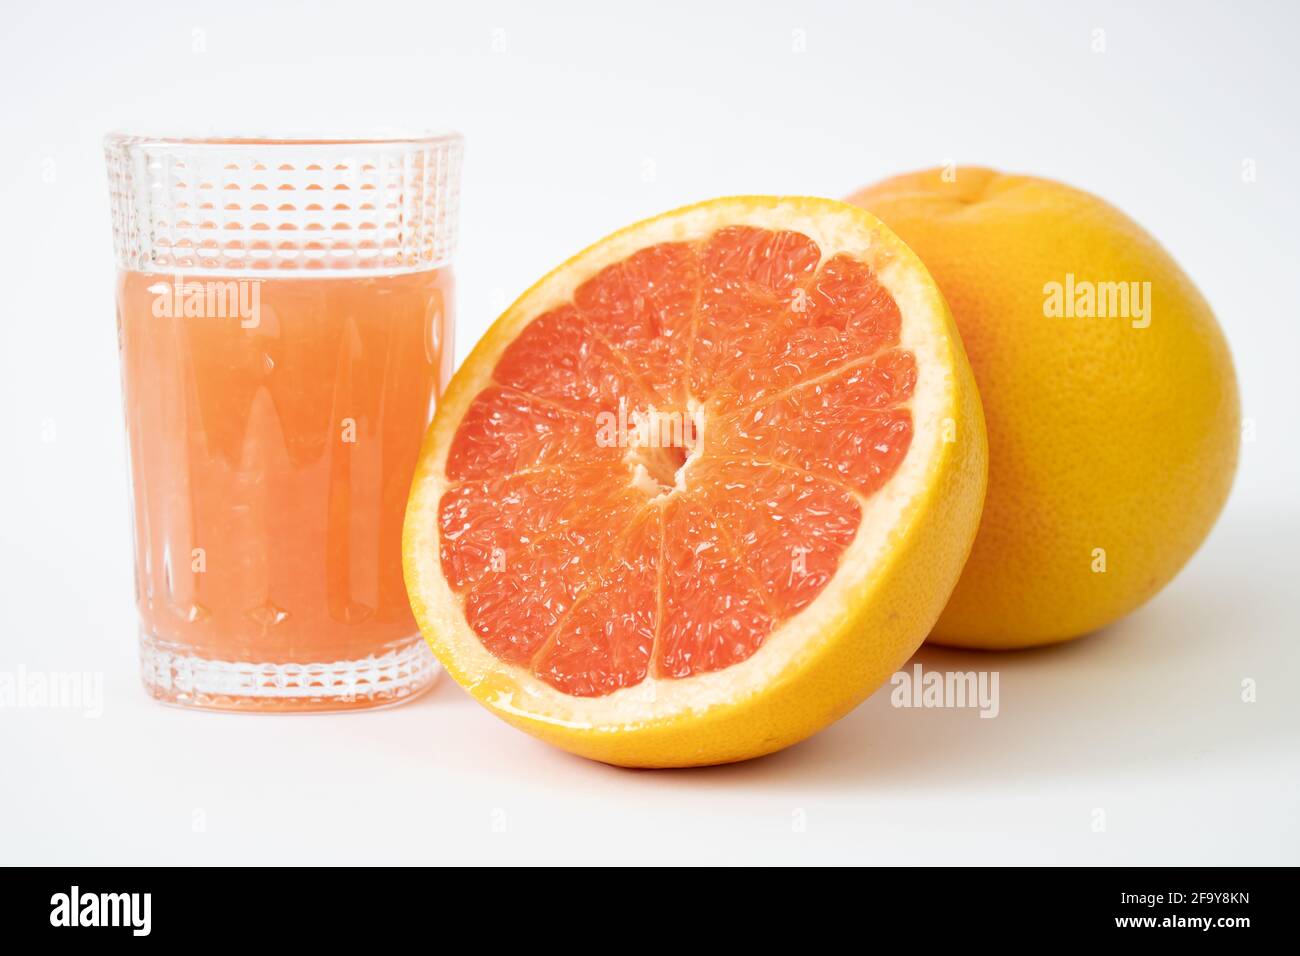 One half of grapefruit, one whole grapegruit, and glass of grapefruit juice. Stock Photo